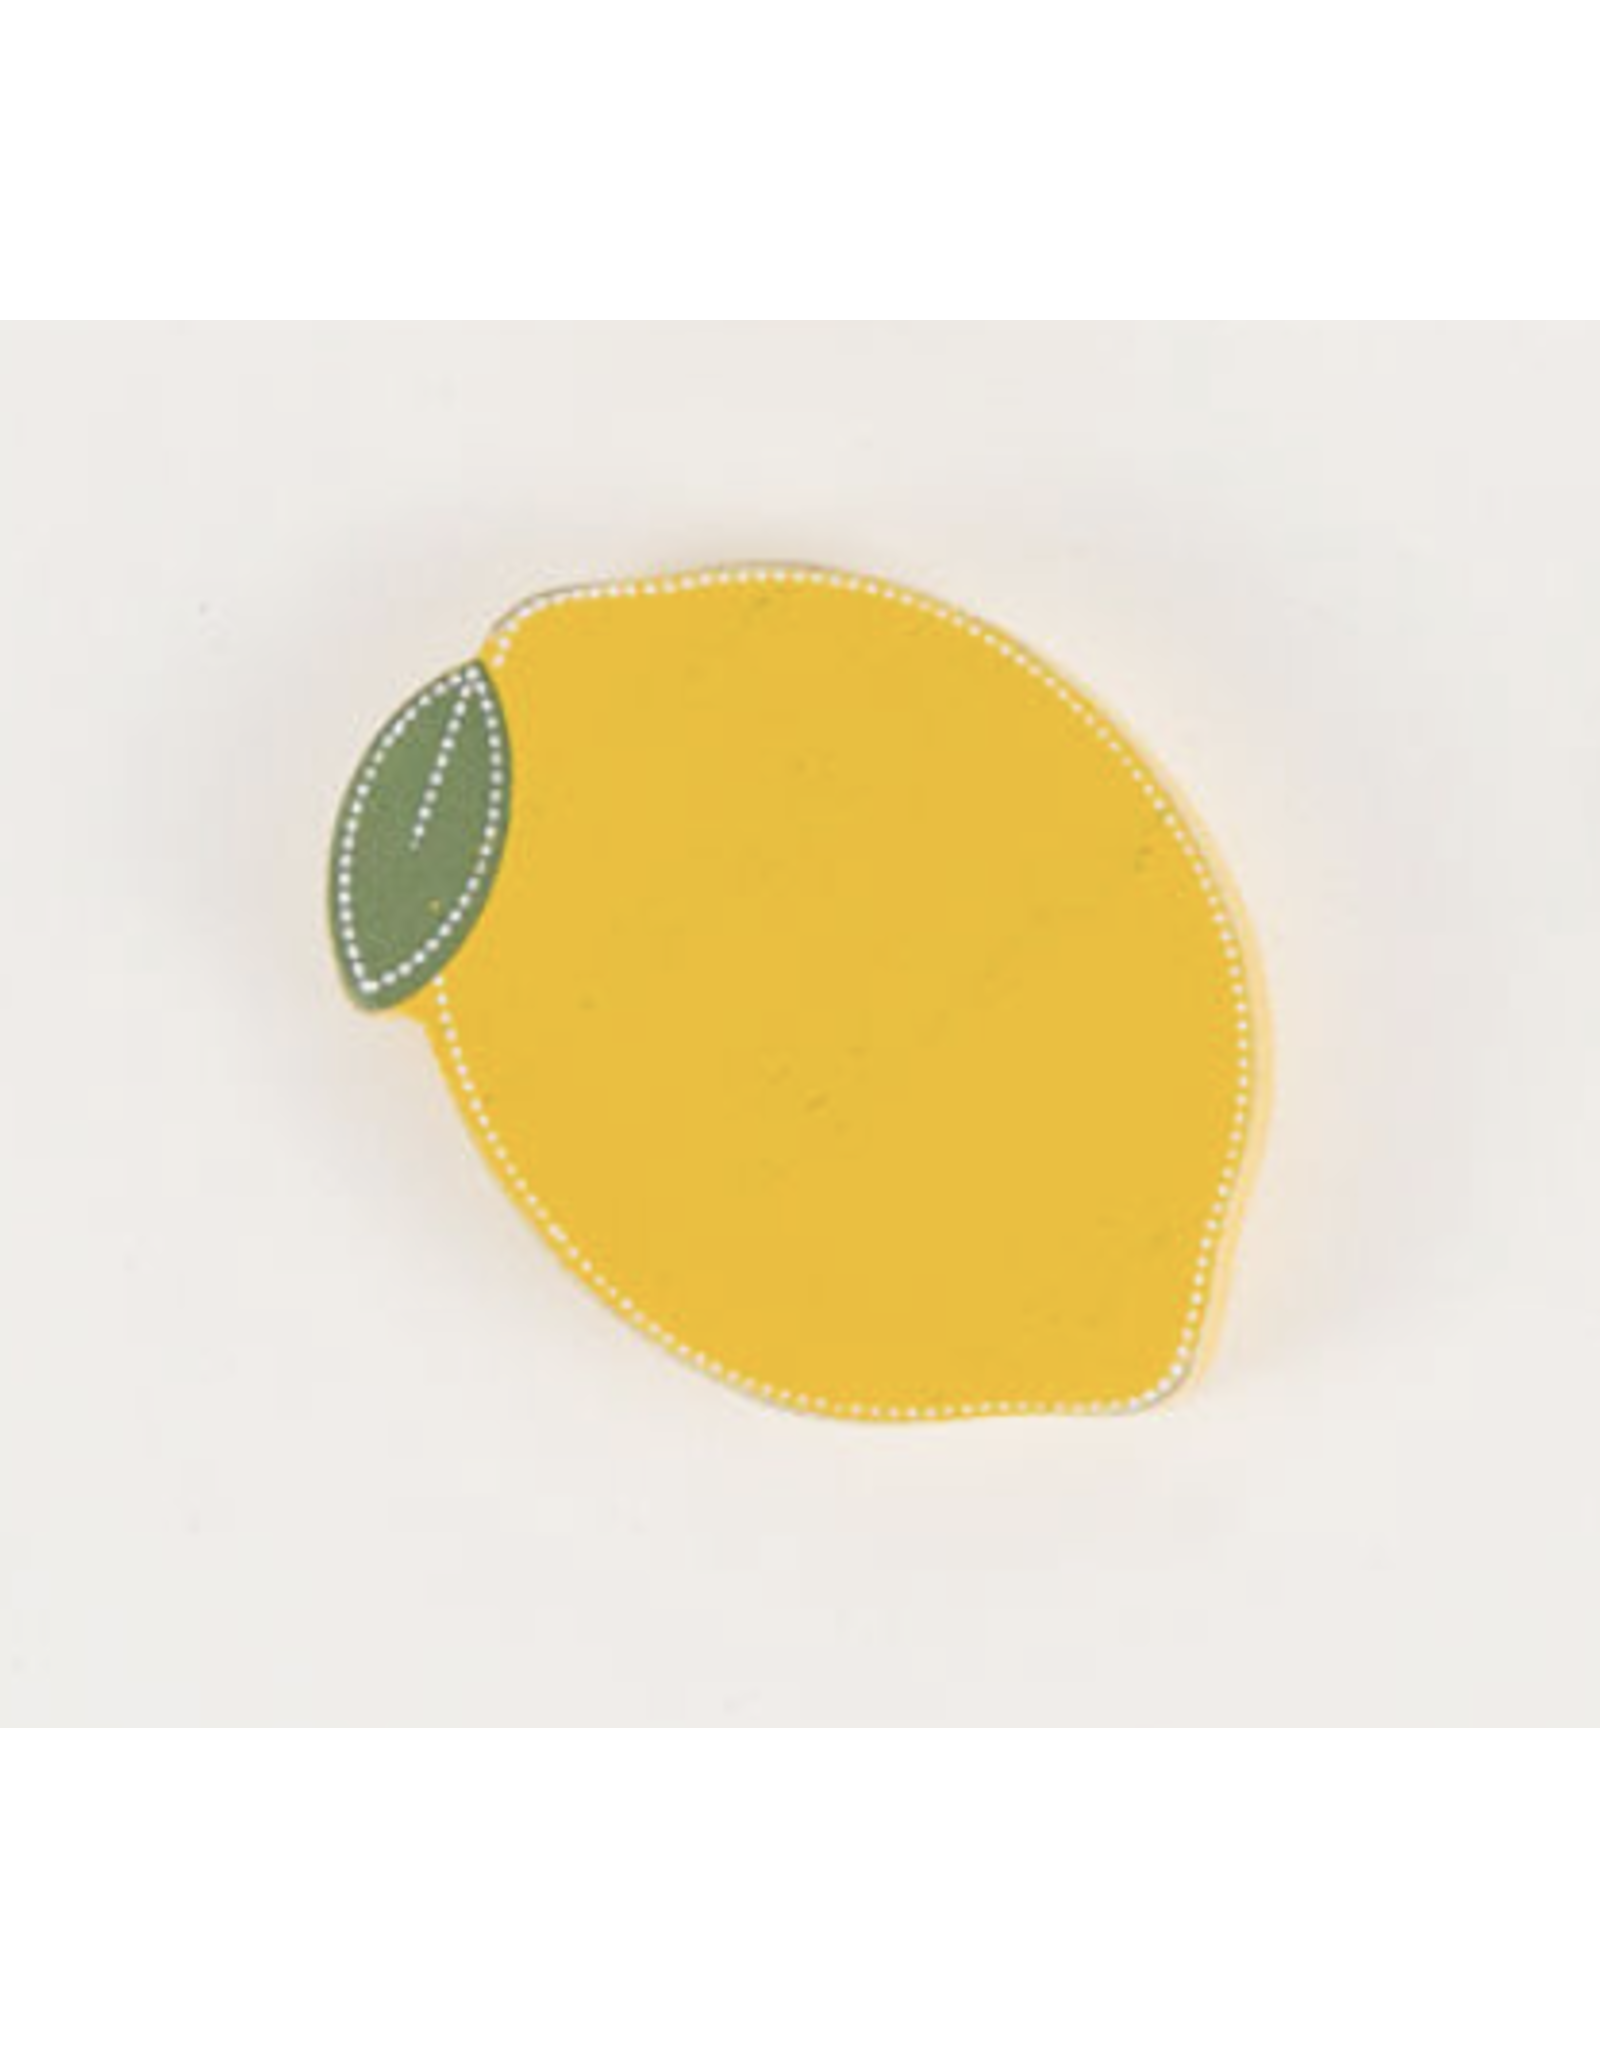 Adams & Co. Lemon Slice Tiles